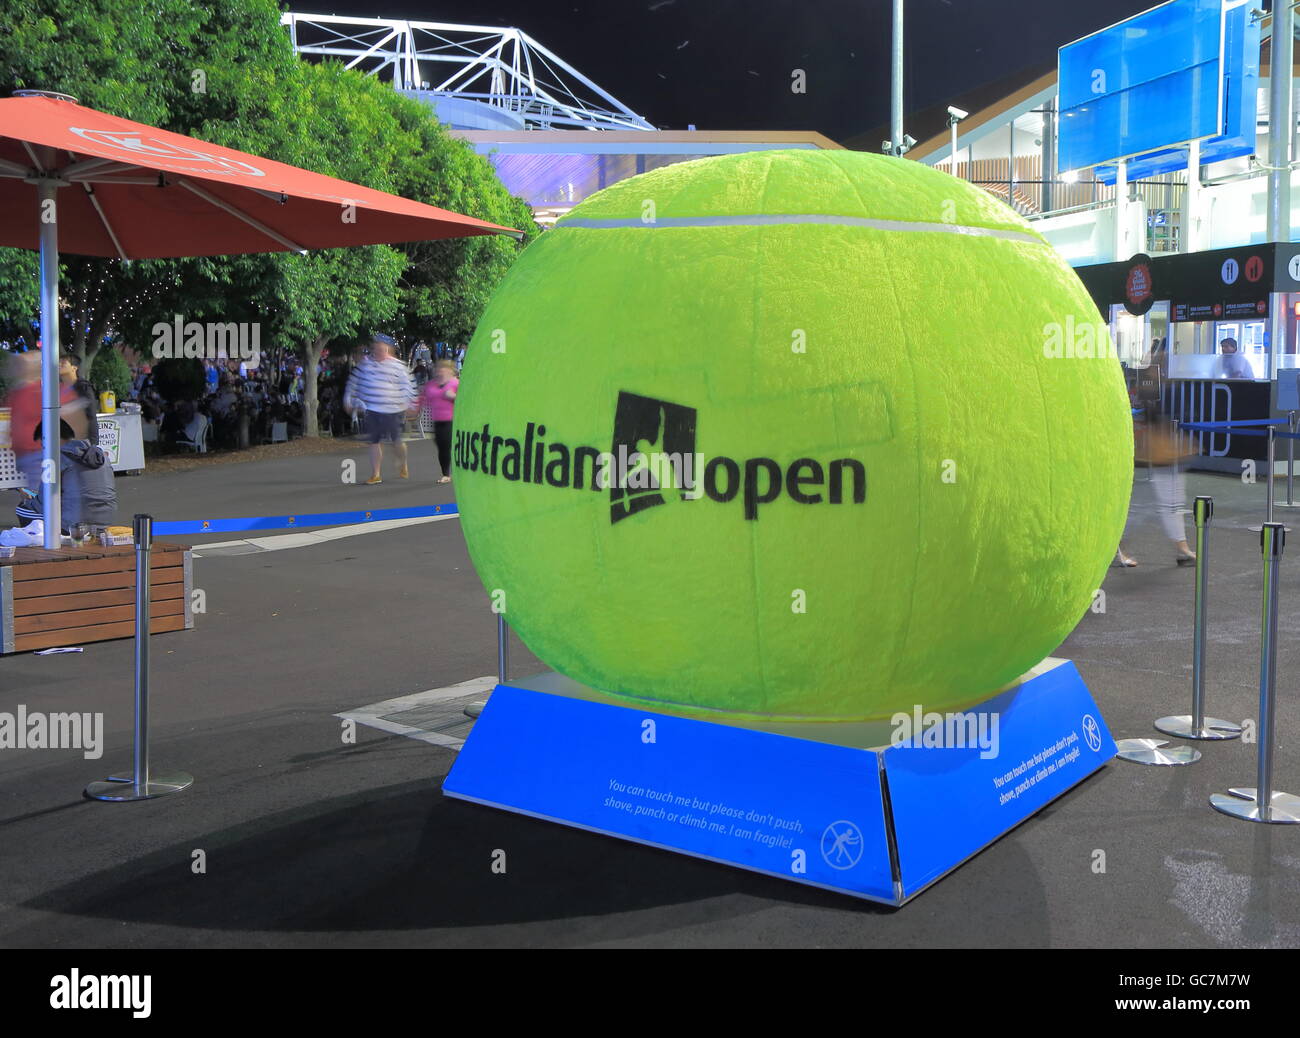 Big tennis ball display at Australian Open tennis in Melbourne Australia  Stock Photo - Alamy